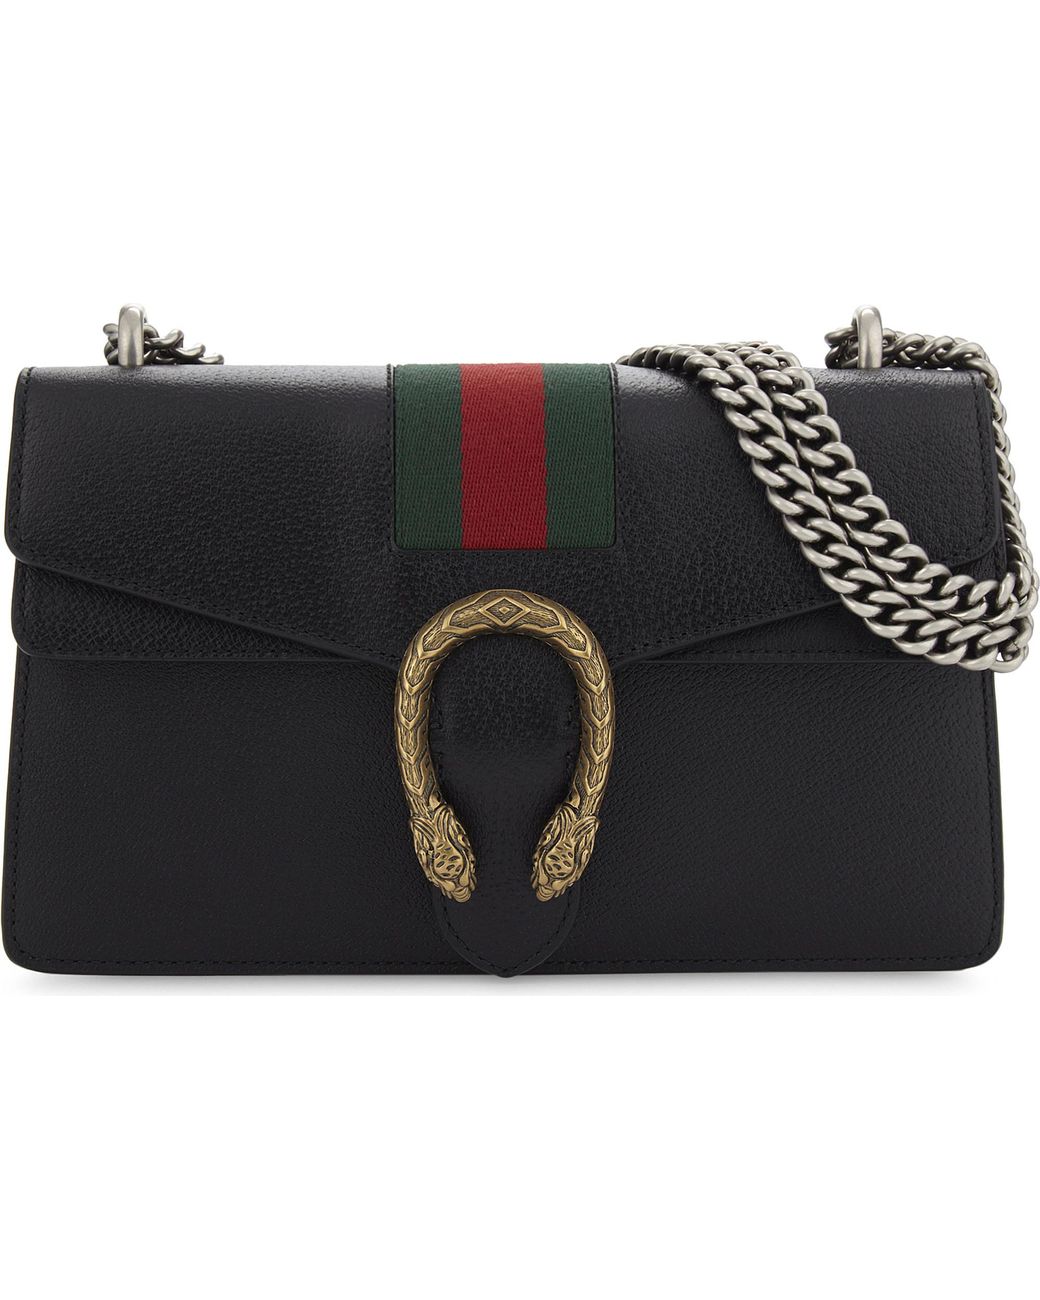 Gucci Dionysus Stripe Leather Bag in Black Lyst